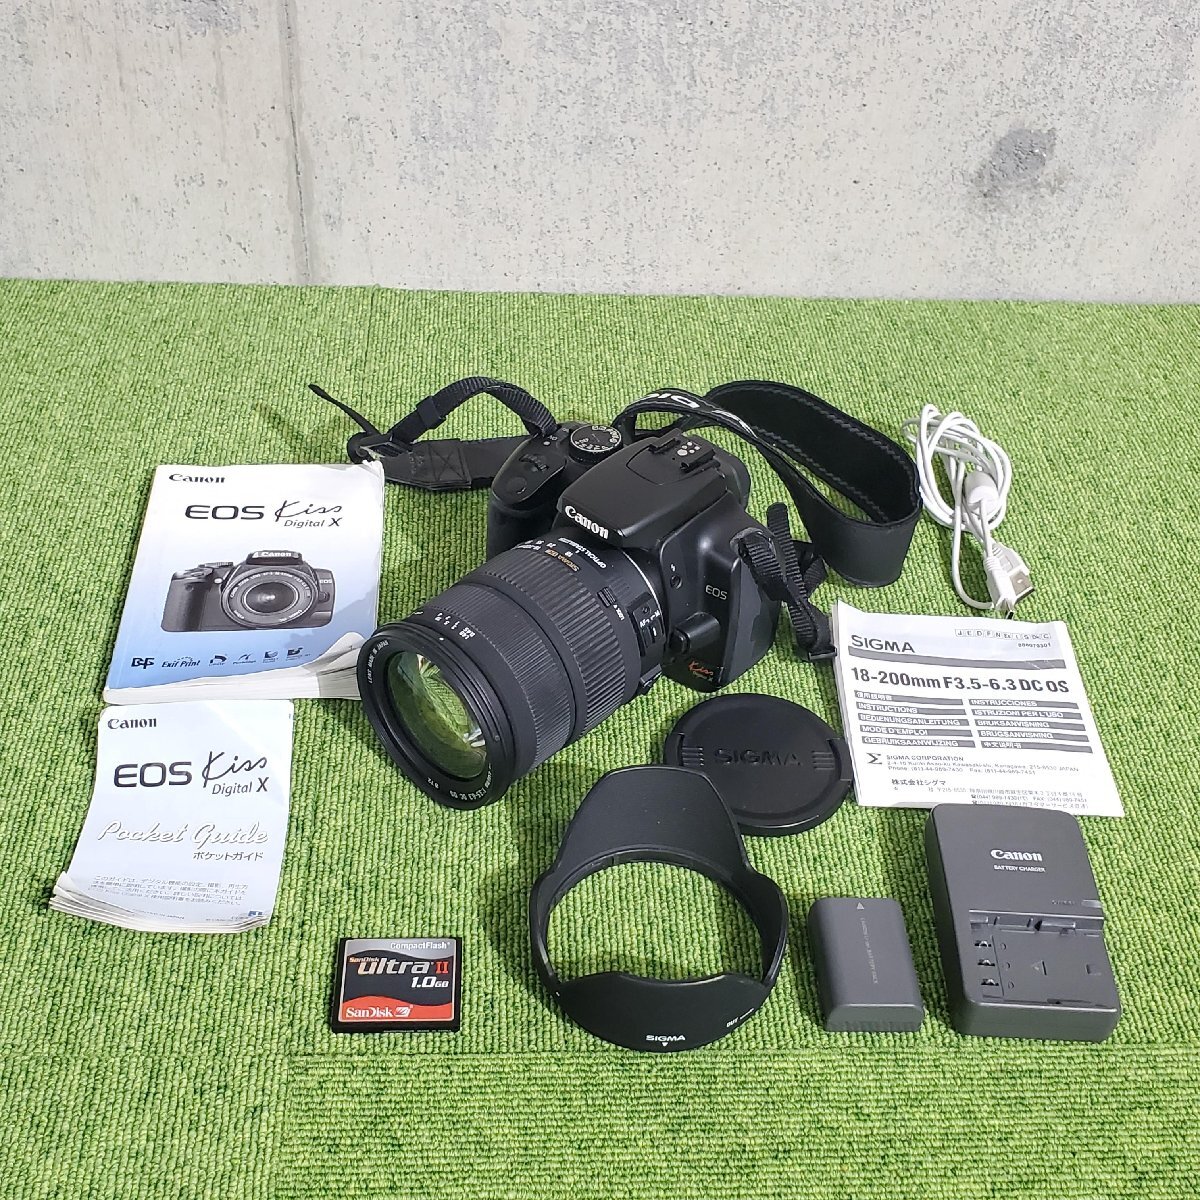 CANON/キヤノン（キャノン） Canon EOS Kiss Digital X デジタル一眼レフカメラ SIGMA ZOOM 18-200mm 1:3.5-6.3 DC s0178の画像1